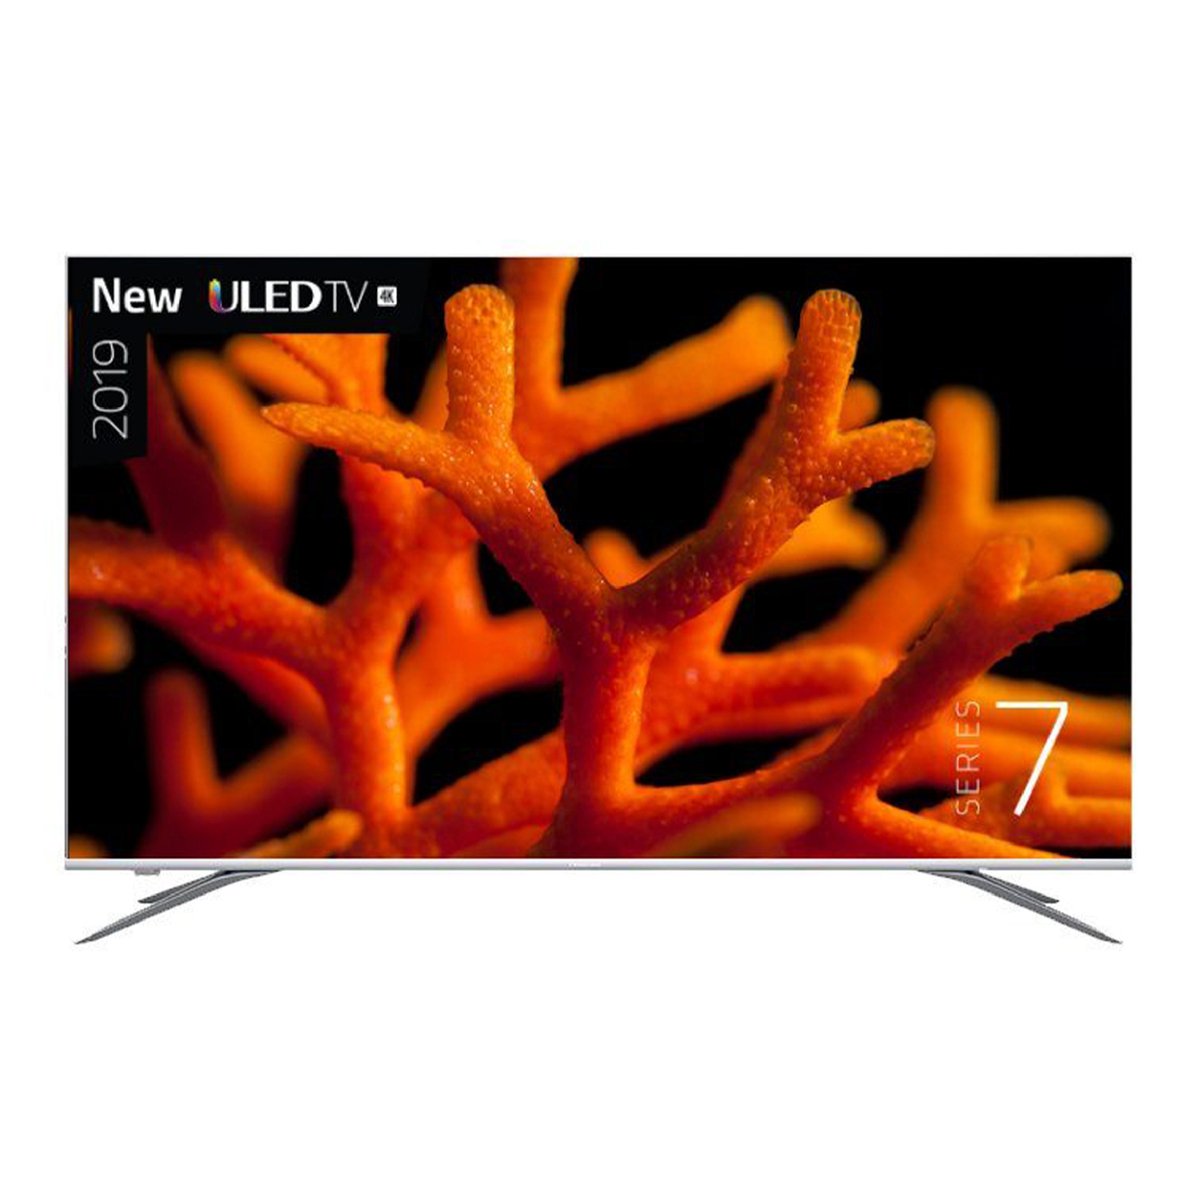 Hisense 4K Ultra HD Android Smart LED TV 65A7200F 65"